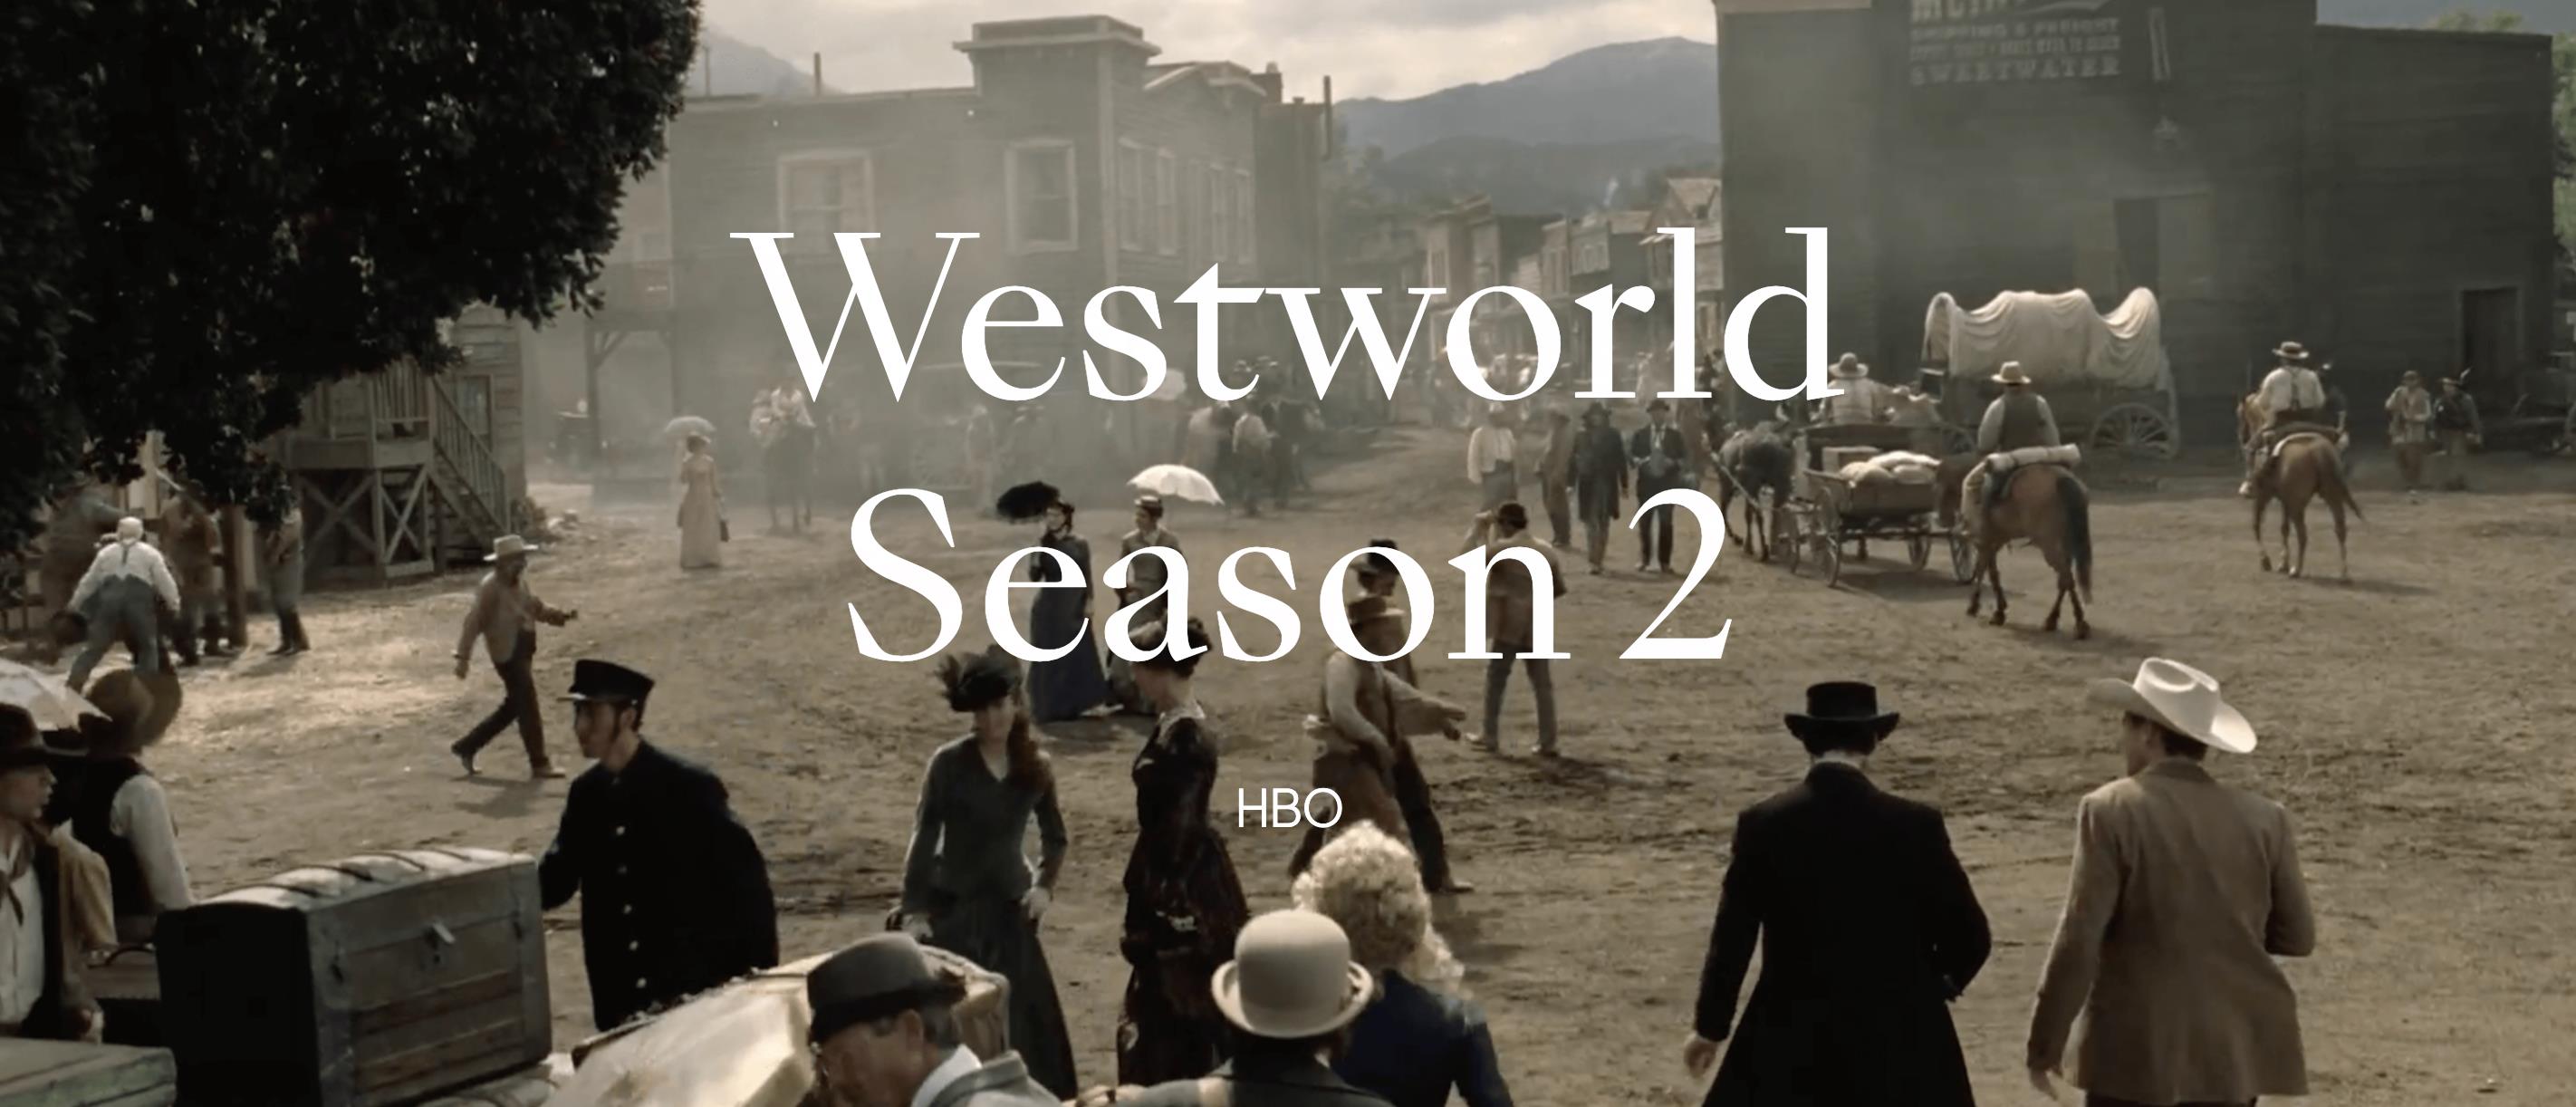 Westworld - Immersive Digital Experience